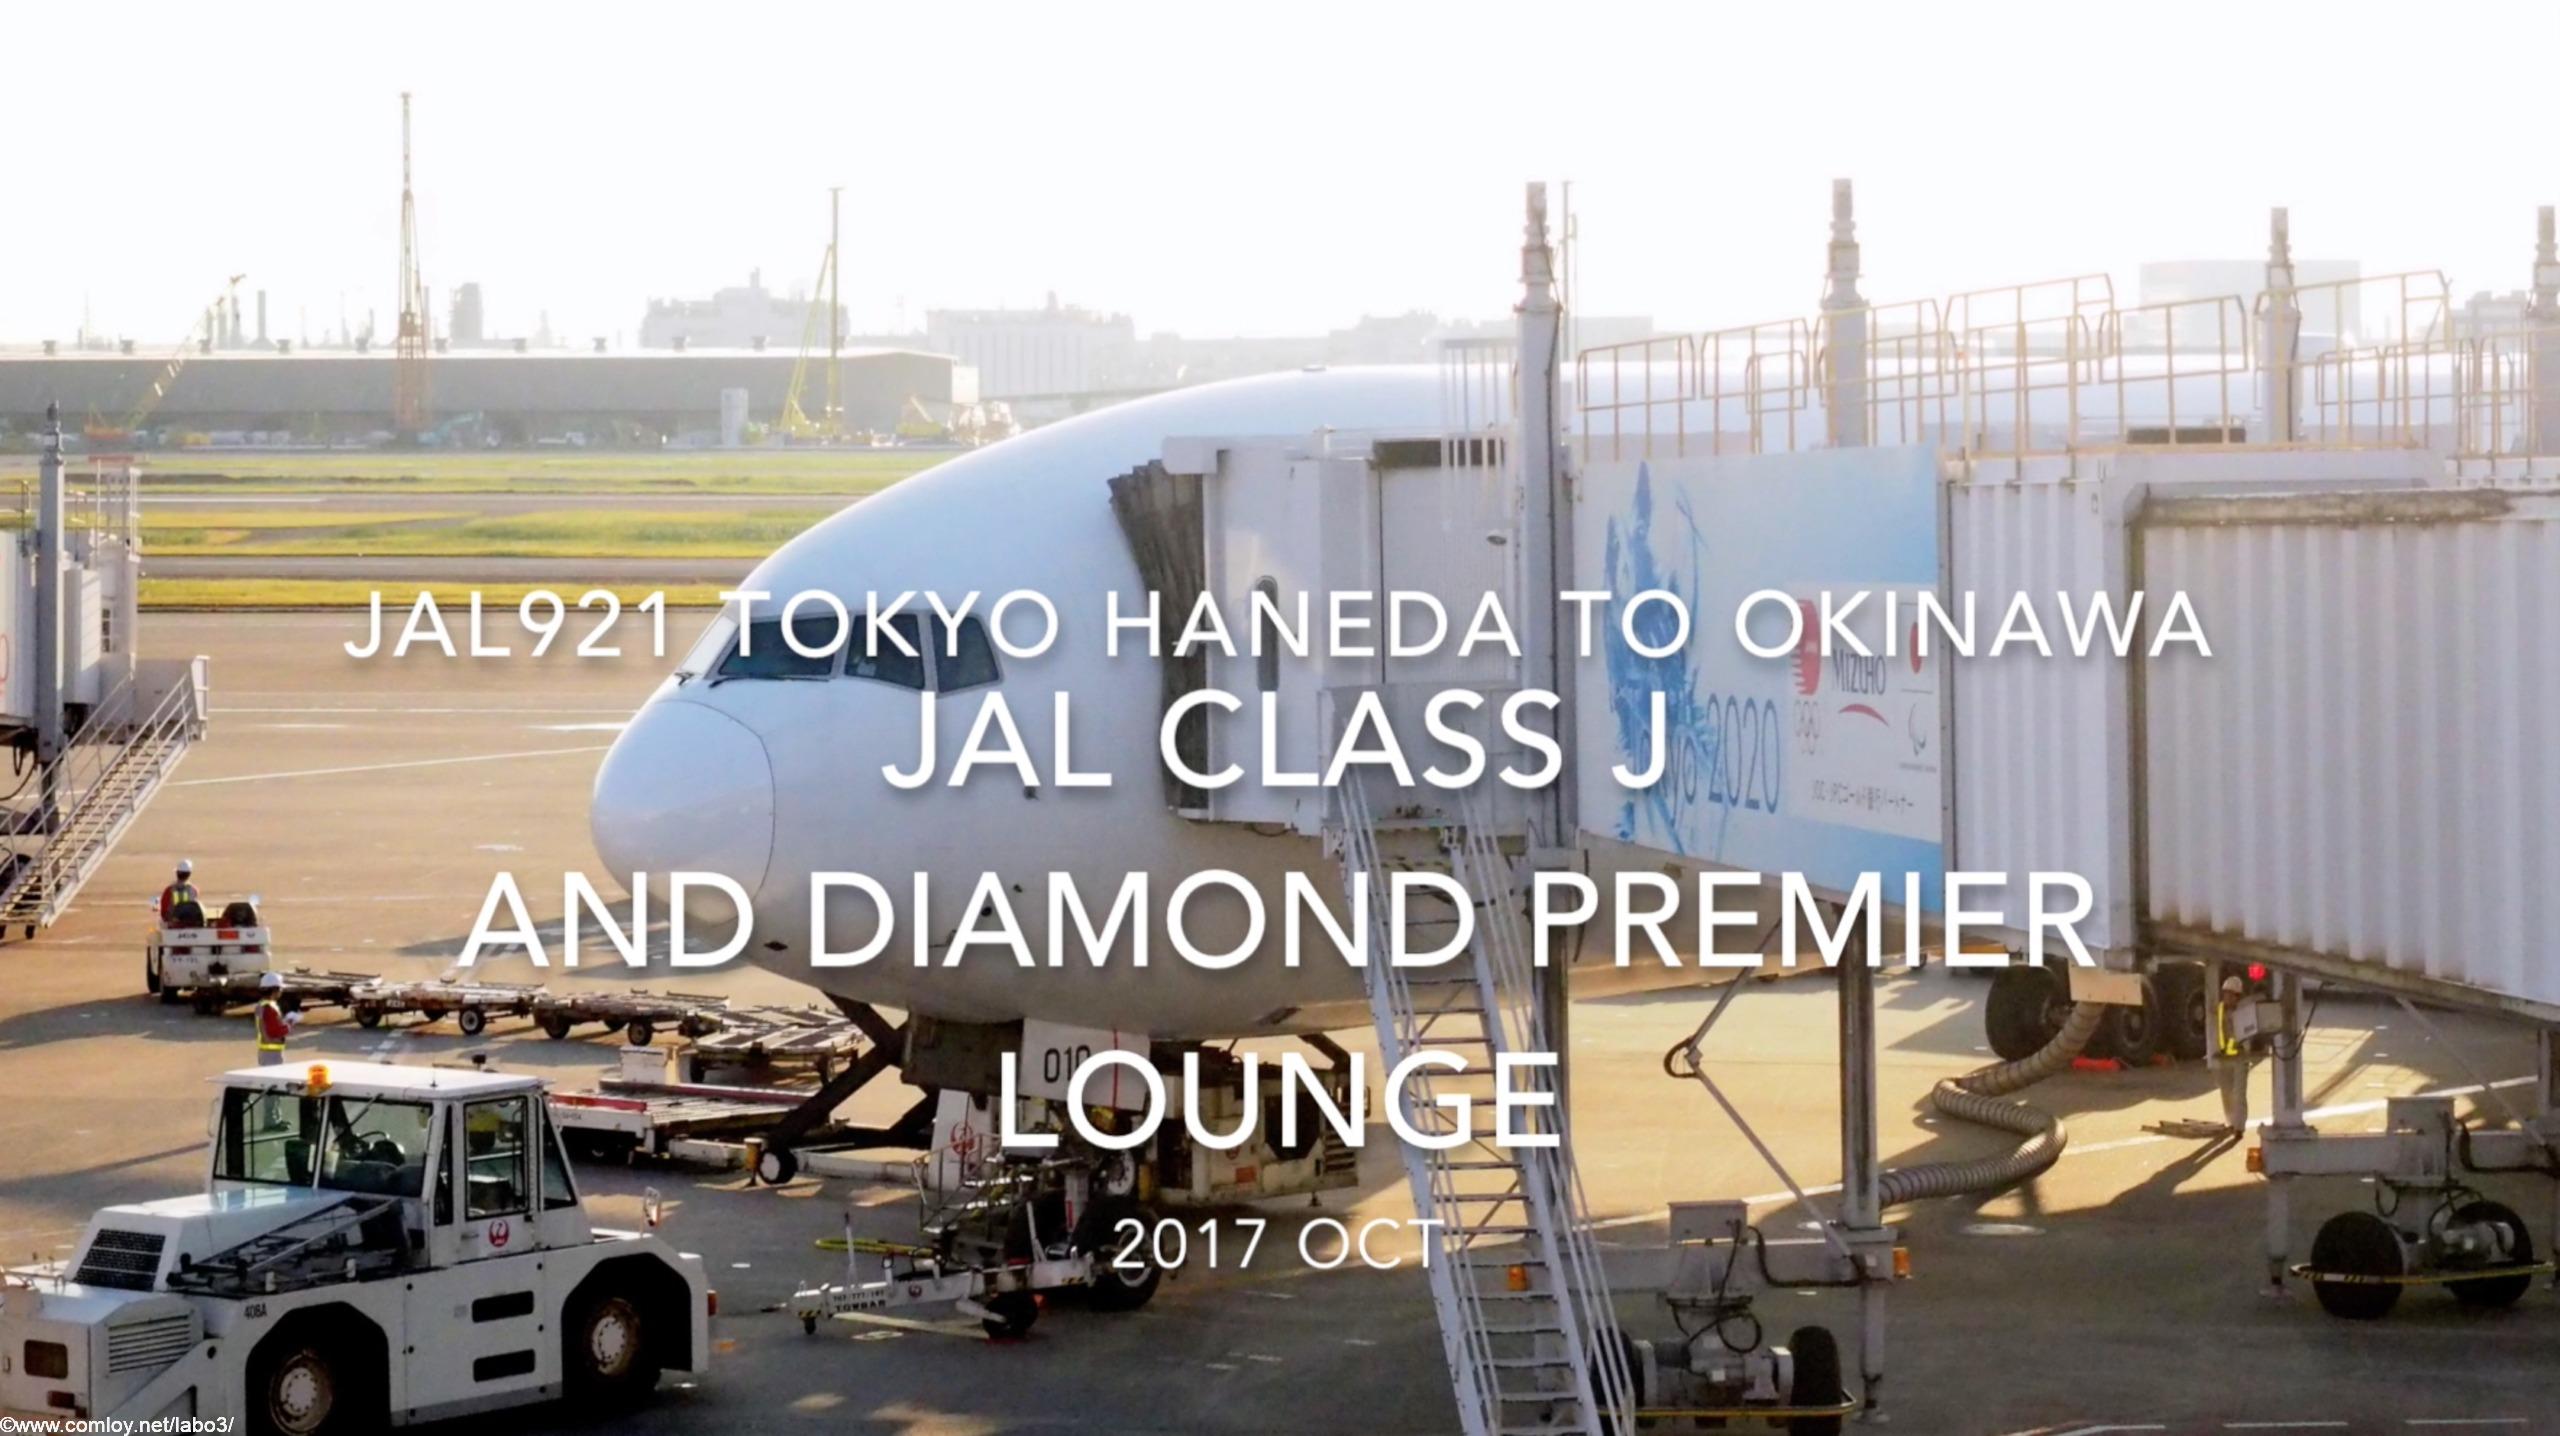 【Flight Report】Japan Airlines ClassJ and Diamond Premier lounge JAL921 TOKYO HANEDA to OKINAWA 2017・10 日本航空クラスJ搭乗記